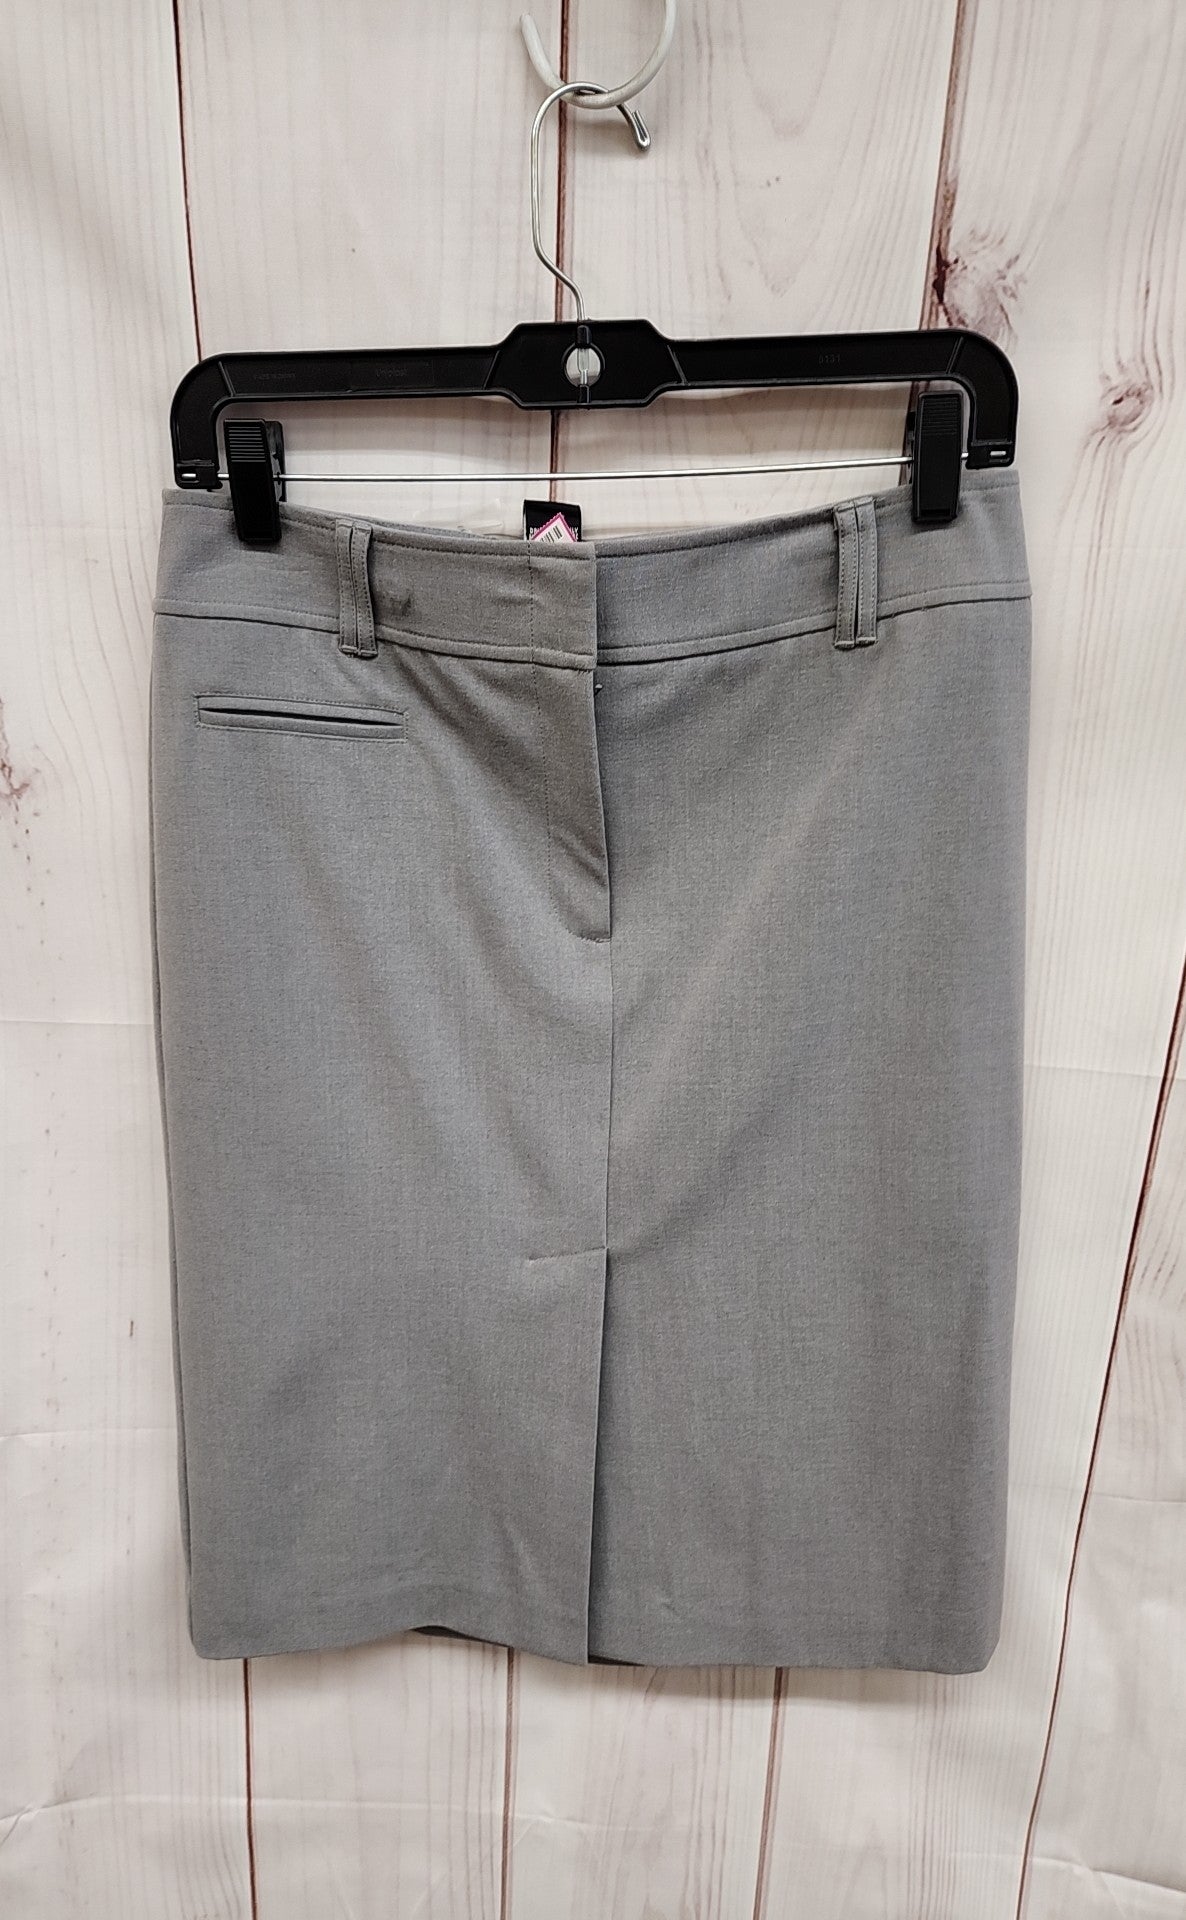 BCBG Maxazria Women's Size 6 Gray Skirt